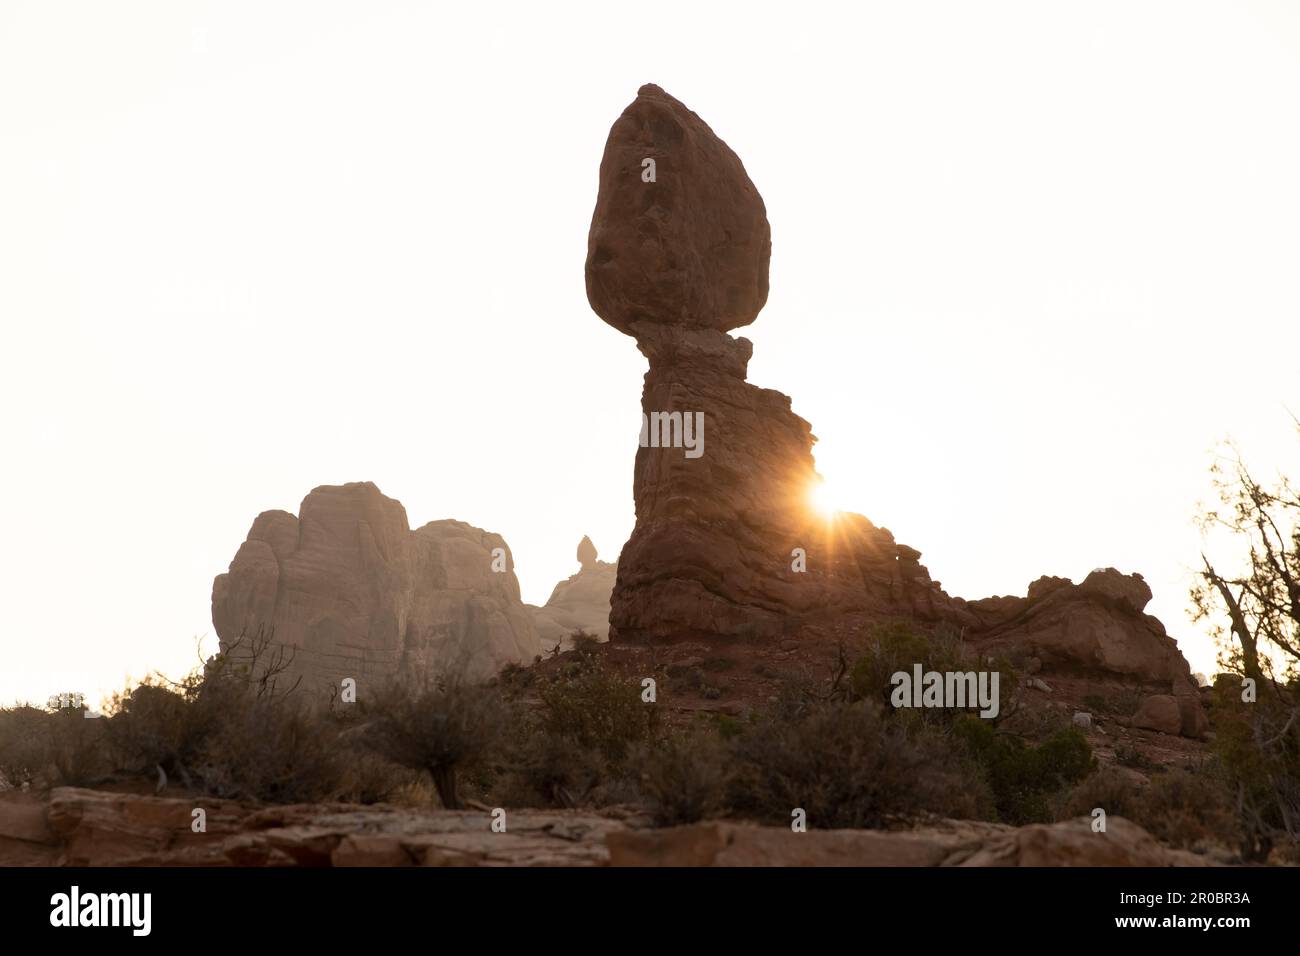 Balanced Rock nel parco Naitonal Arches all'alba Foto Stock